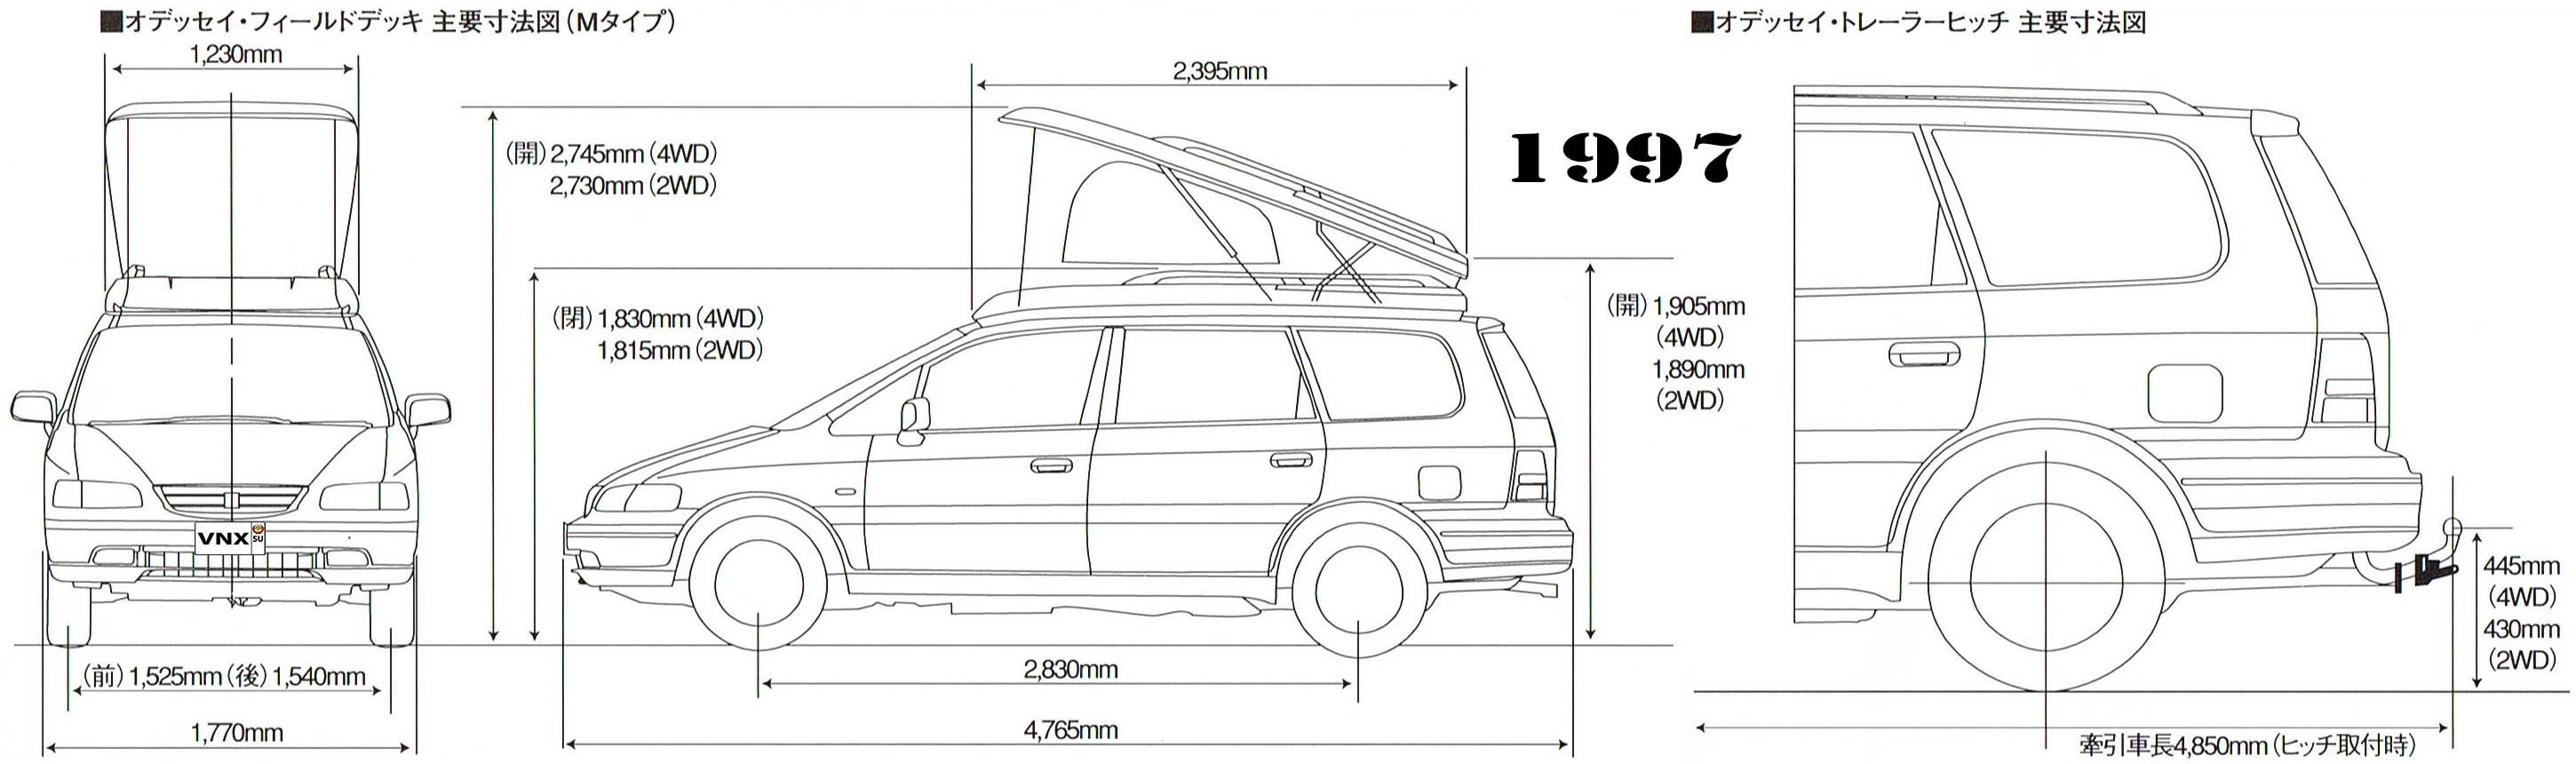 Габаритные размеры Хонда Одиссей mk1 (dimensions Honda Odyssey Fielddeck)